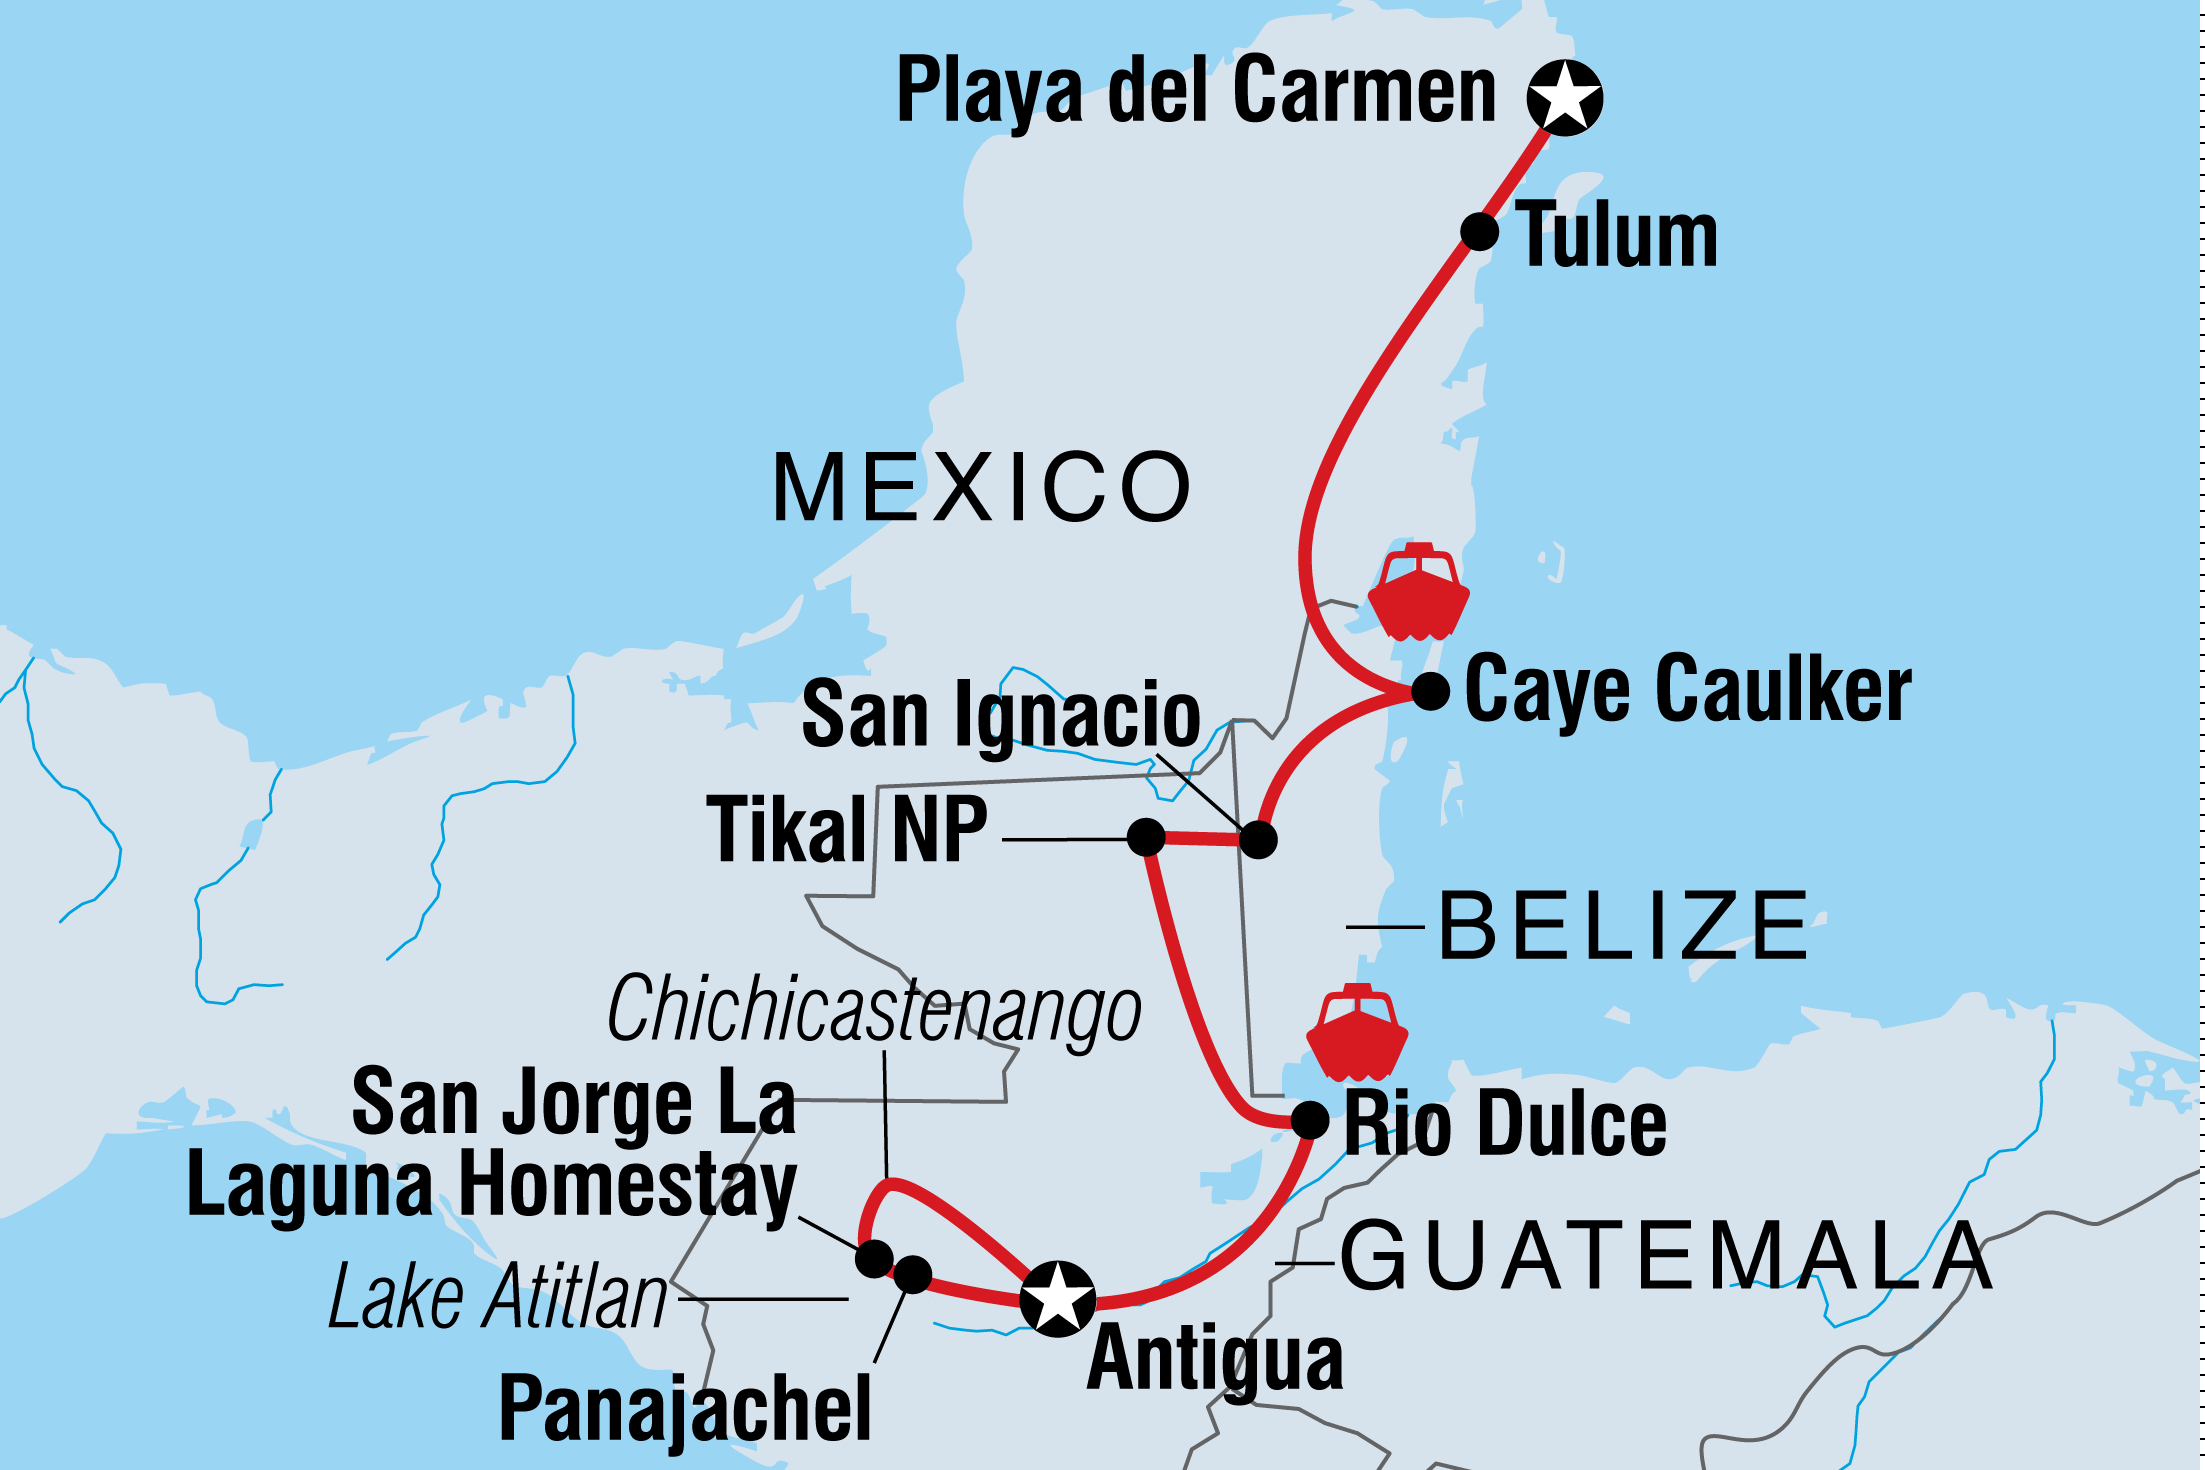 belize citizen travel to mexico